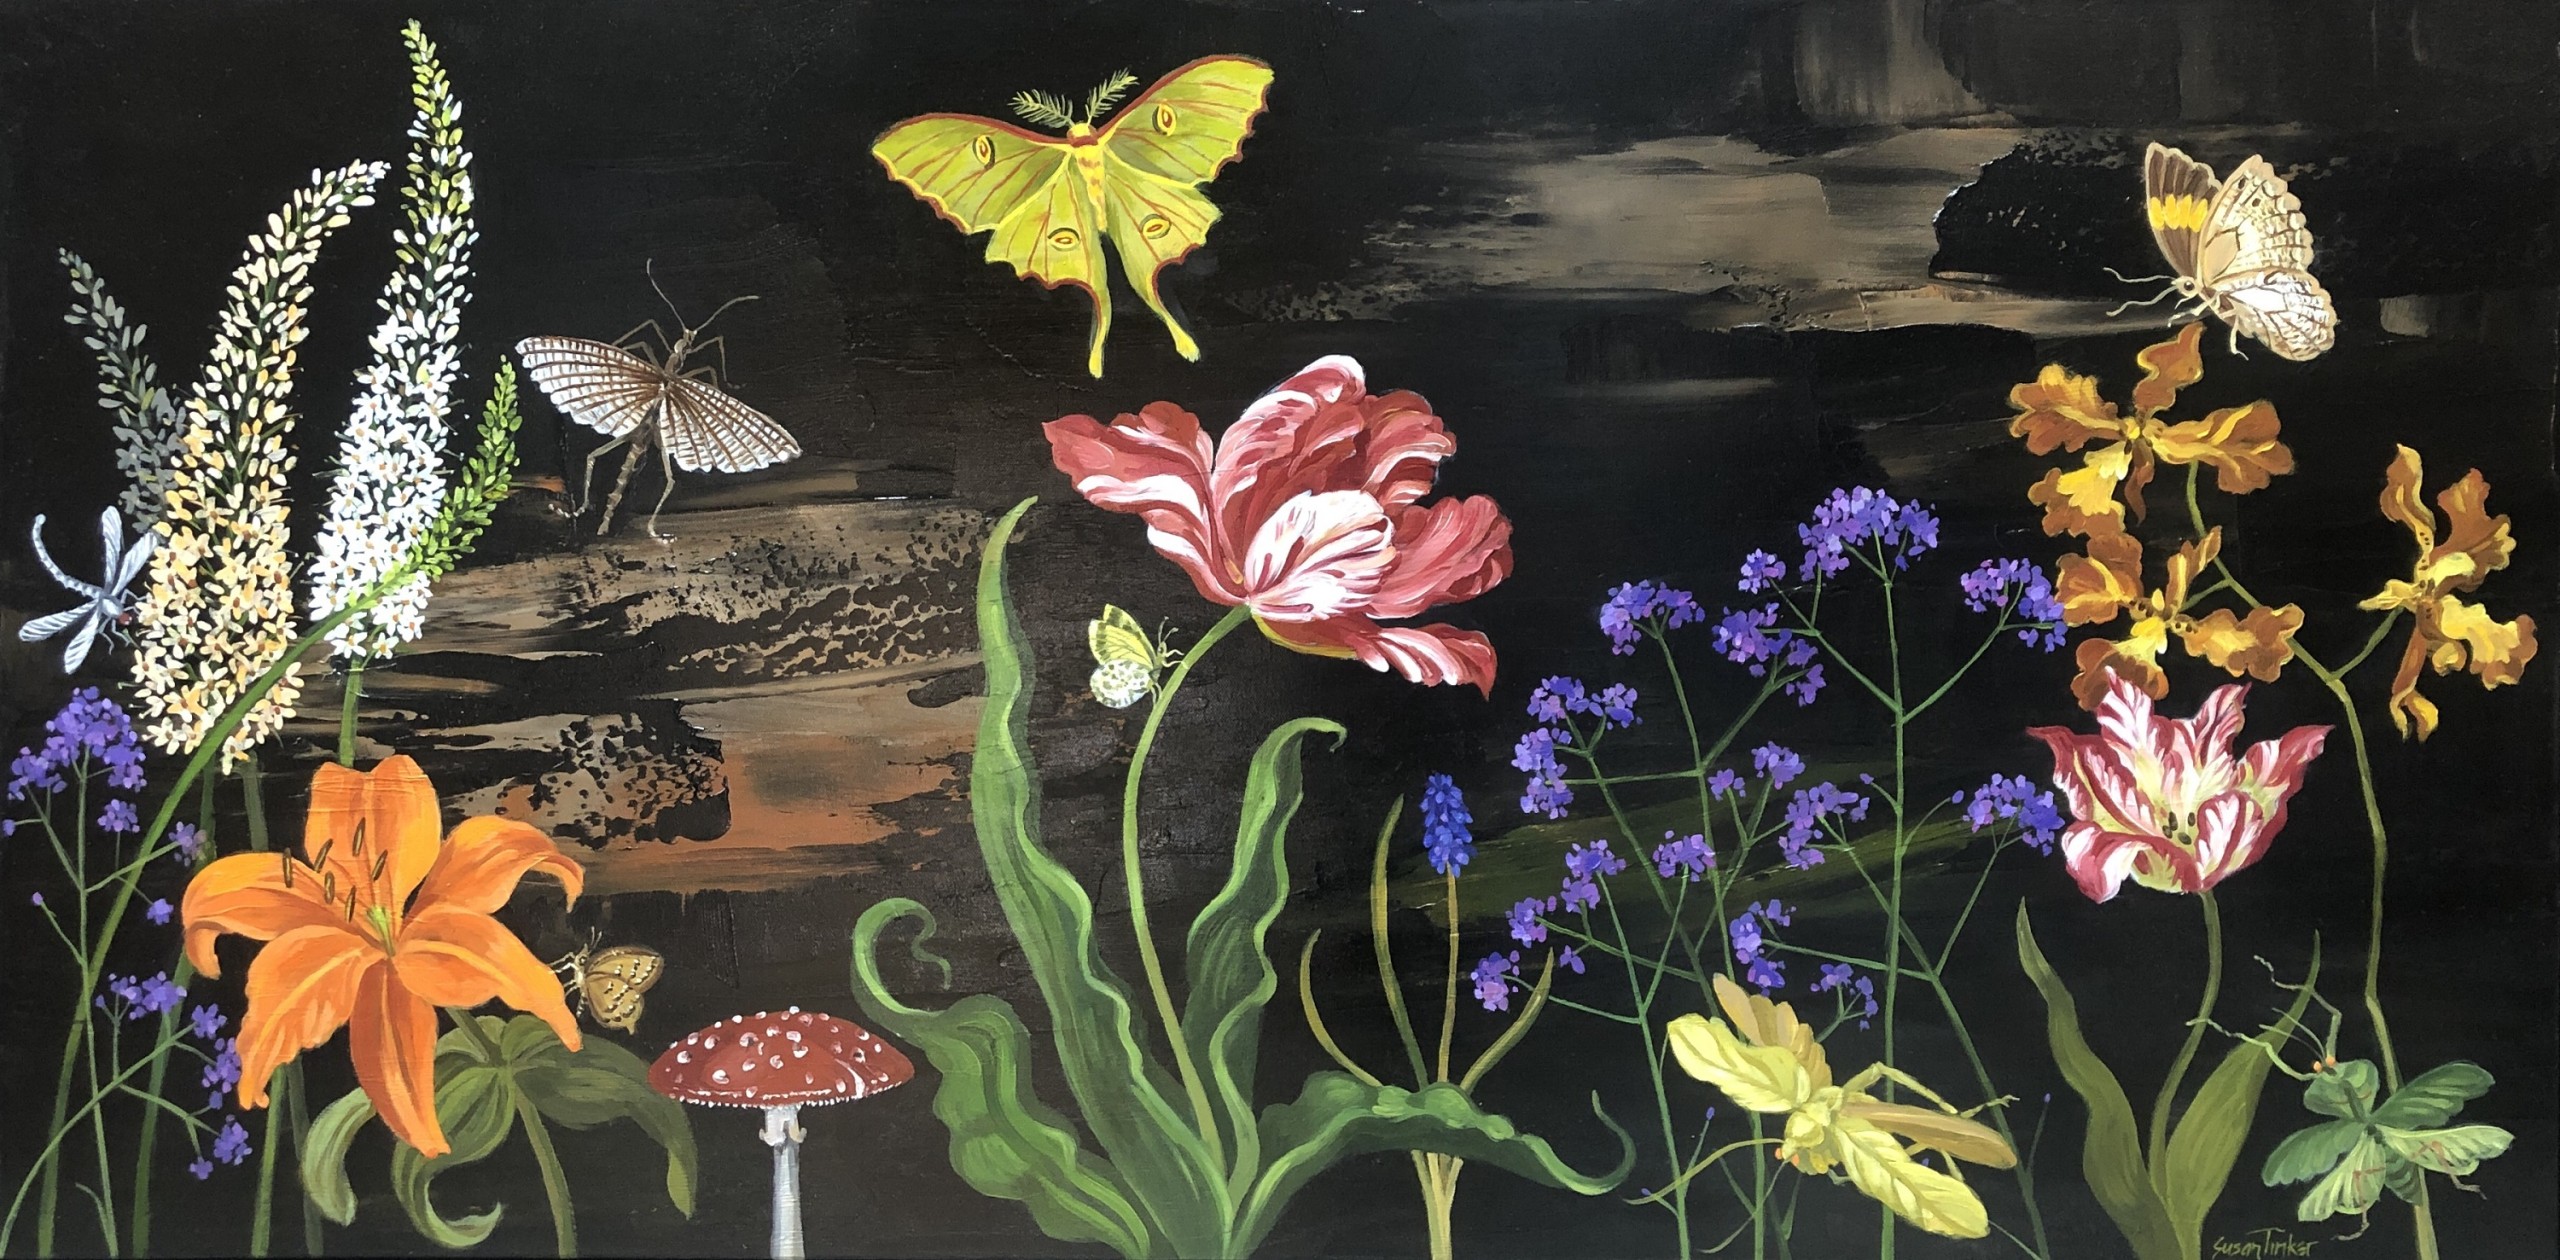 Susan Tinker, “Fantasy Garden”, oil on canvas